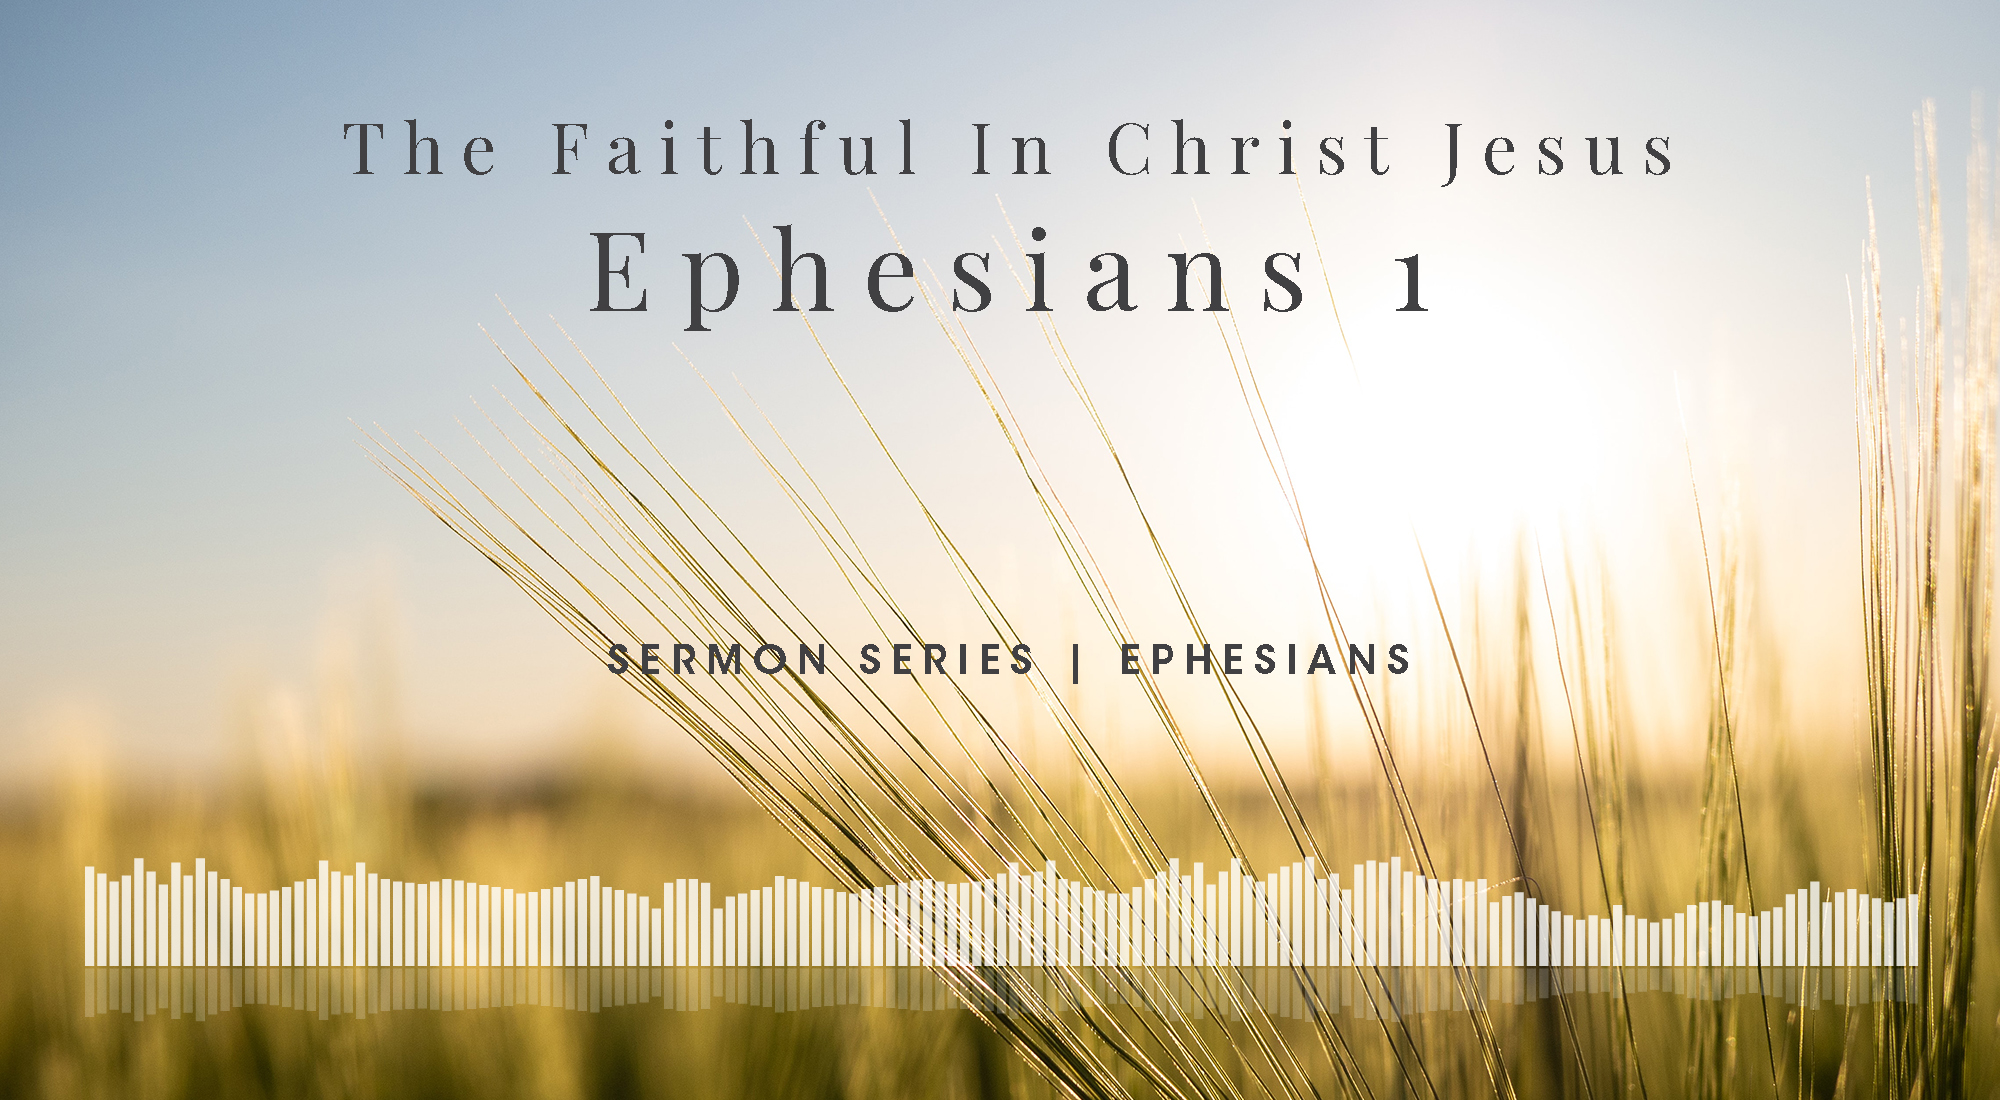 The faithful in Christ Jesus, Ephesians 1, From Our Ephesians Sermon Series